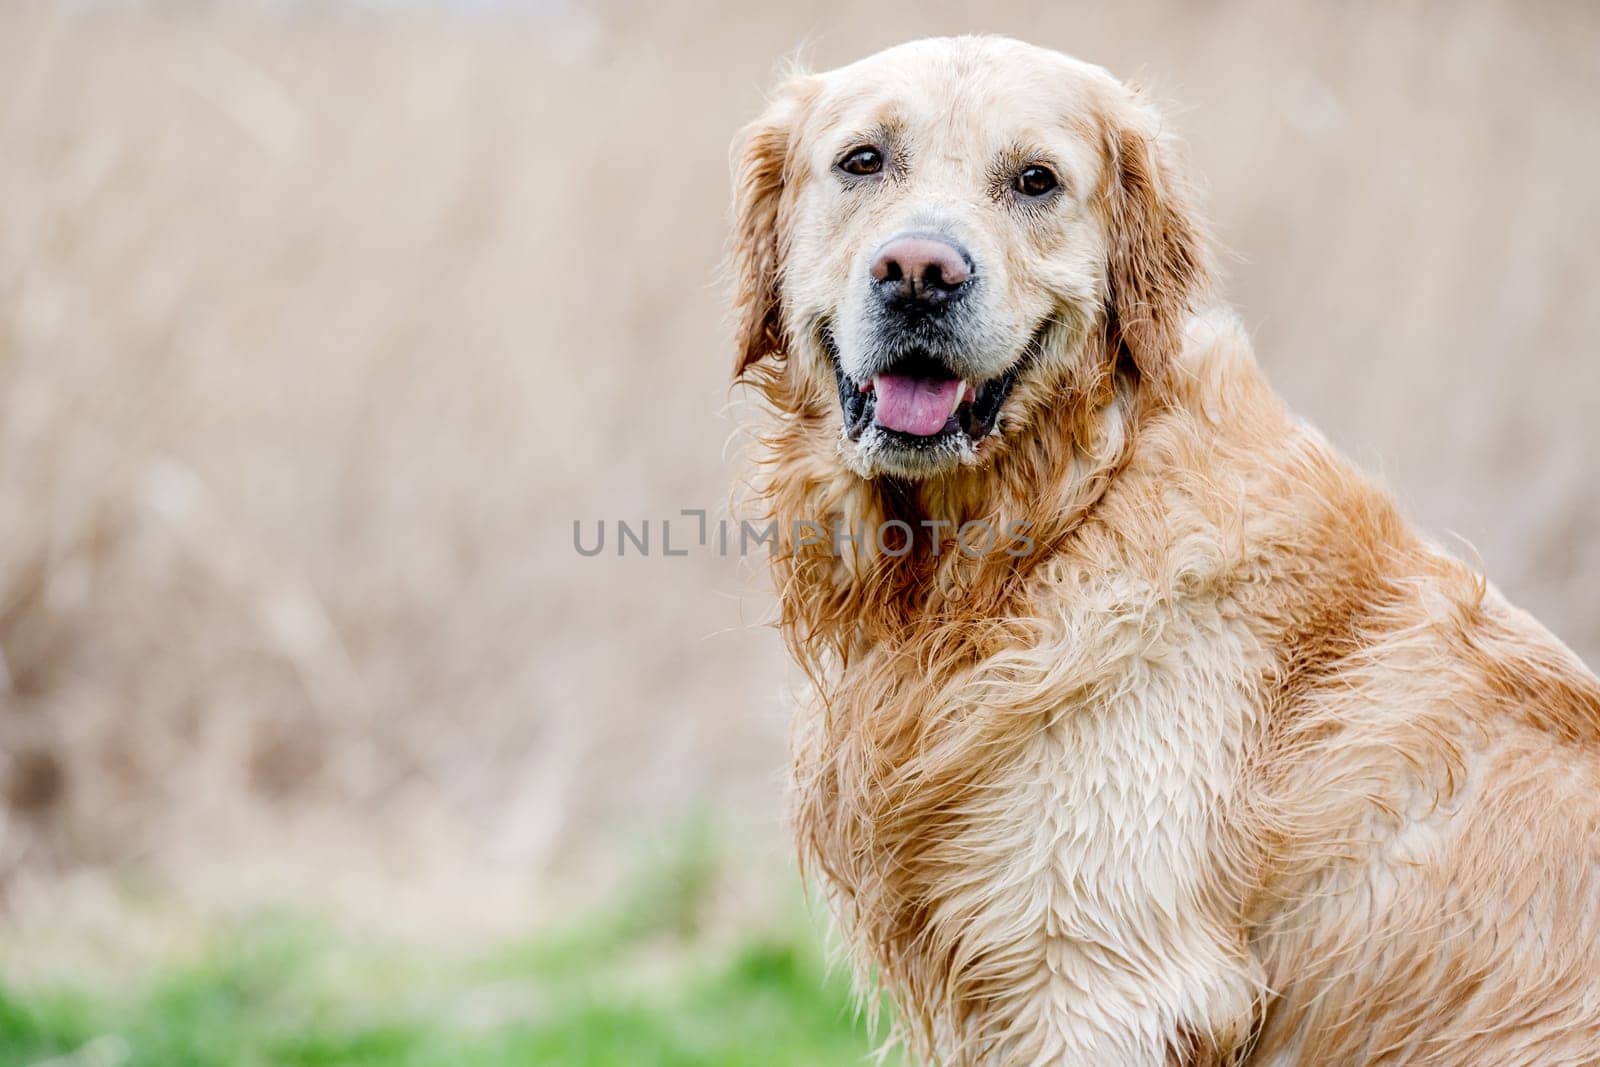 Adorable dog golden retriever breed outdoors looking into camera